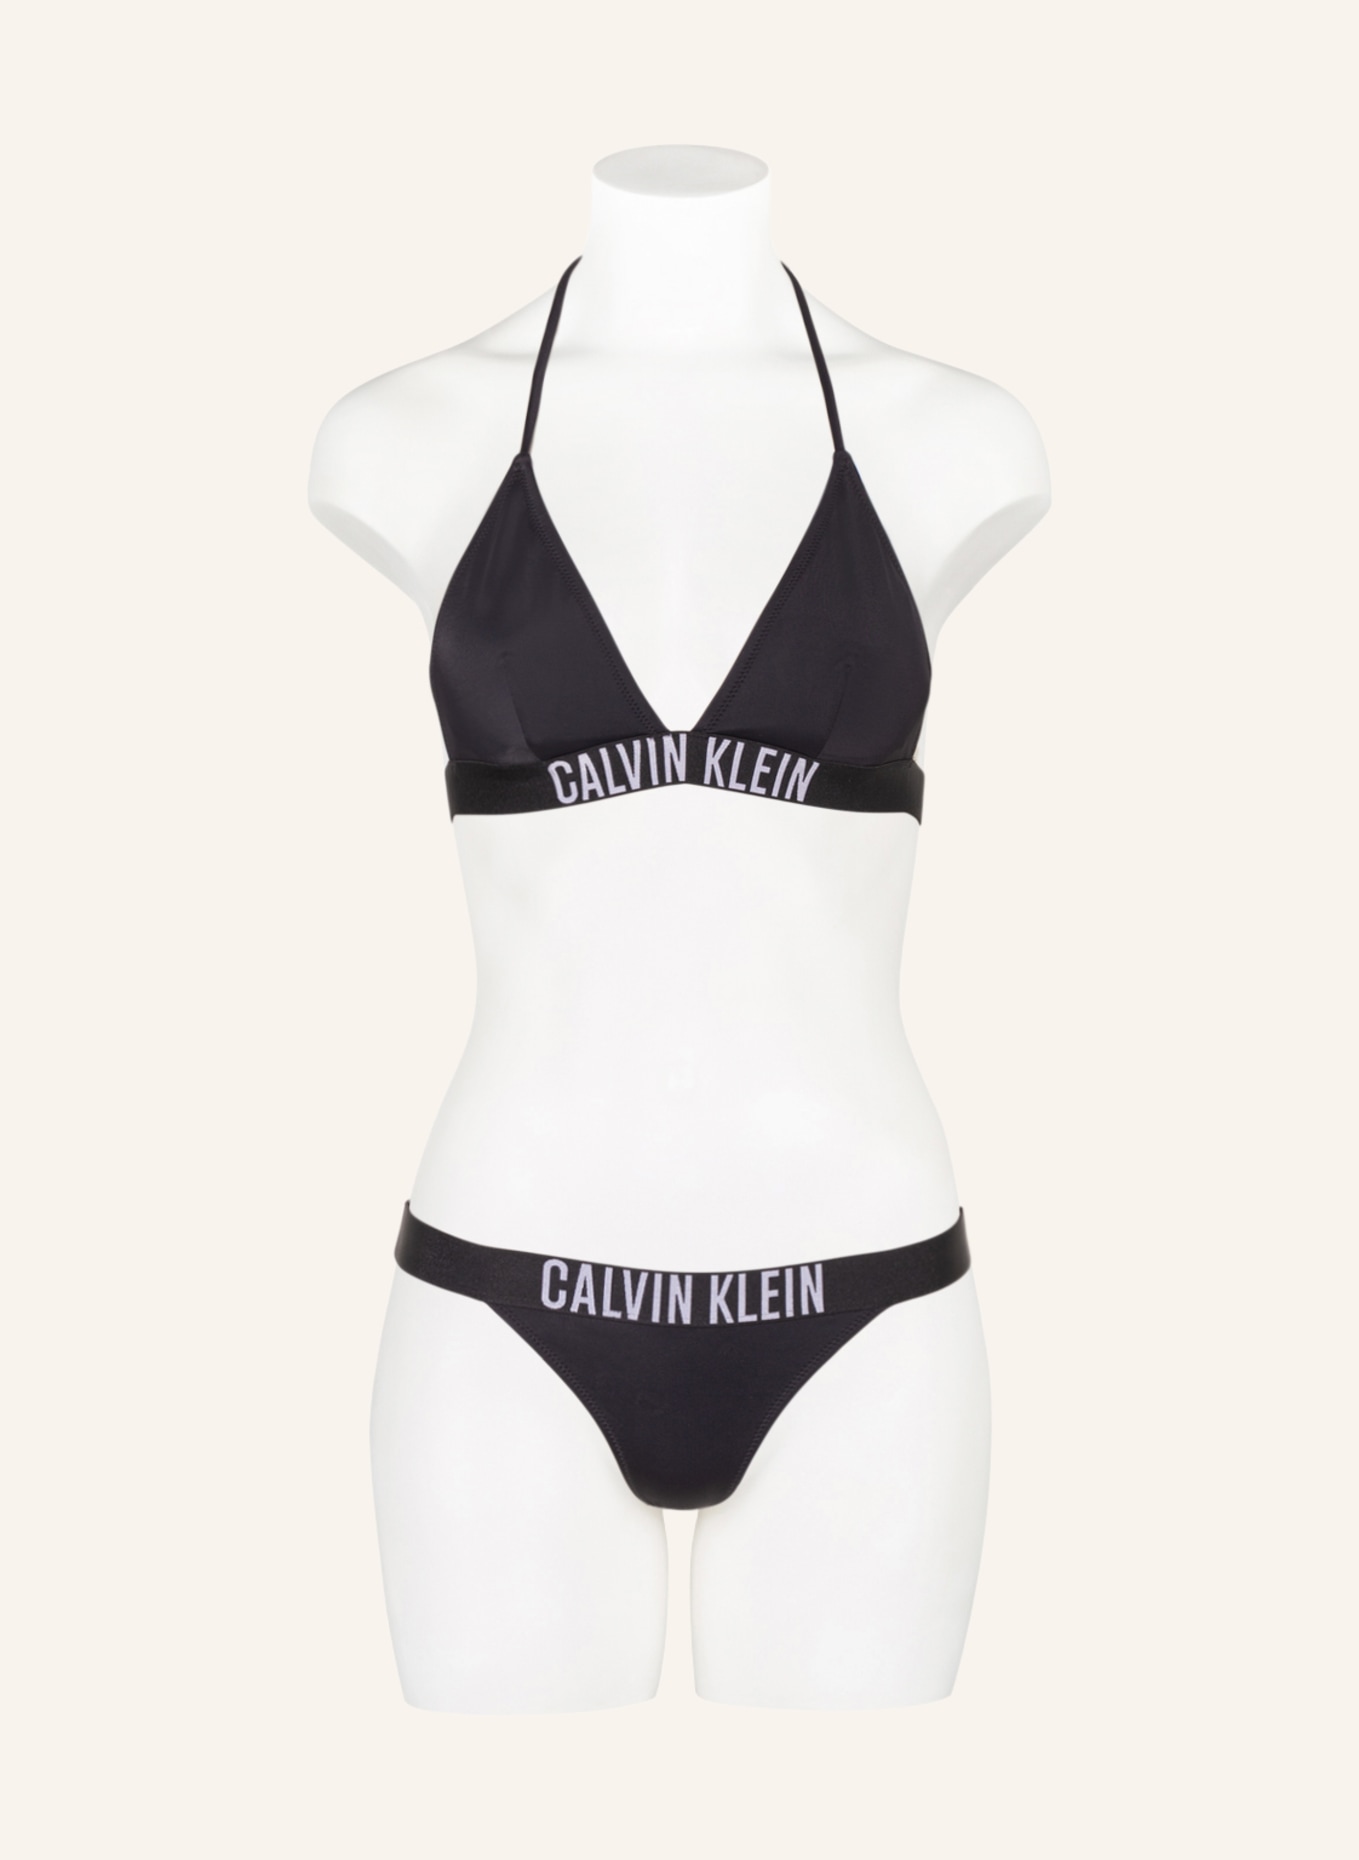 Calvin Klein Intense Power logo high leg brazillian bikini bottom in black